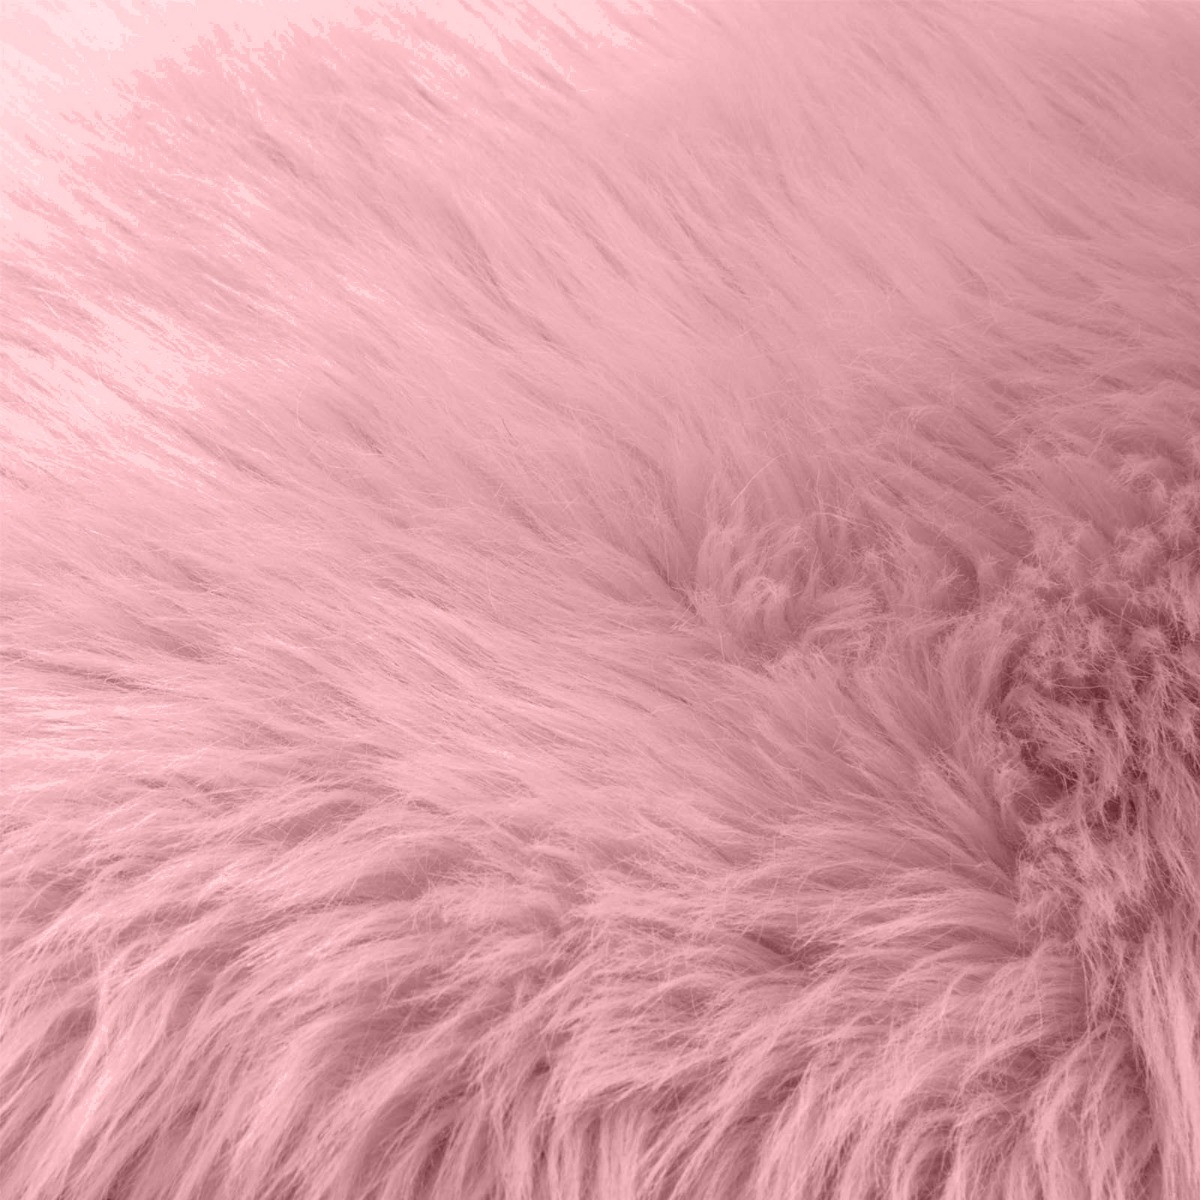 Sienna Faux Fur Sheepskin Rug, Blush Pink - 60 x 90cm>